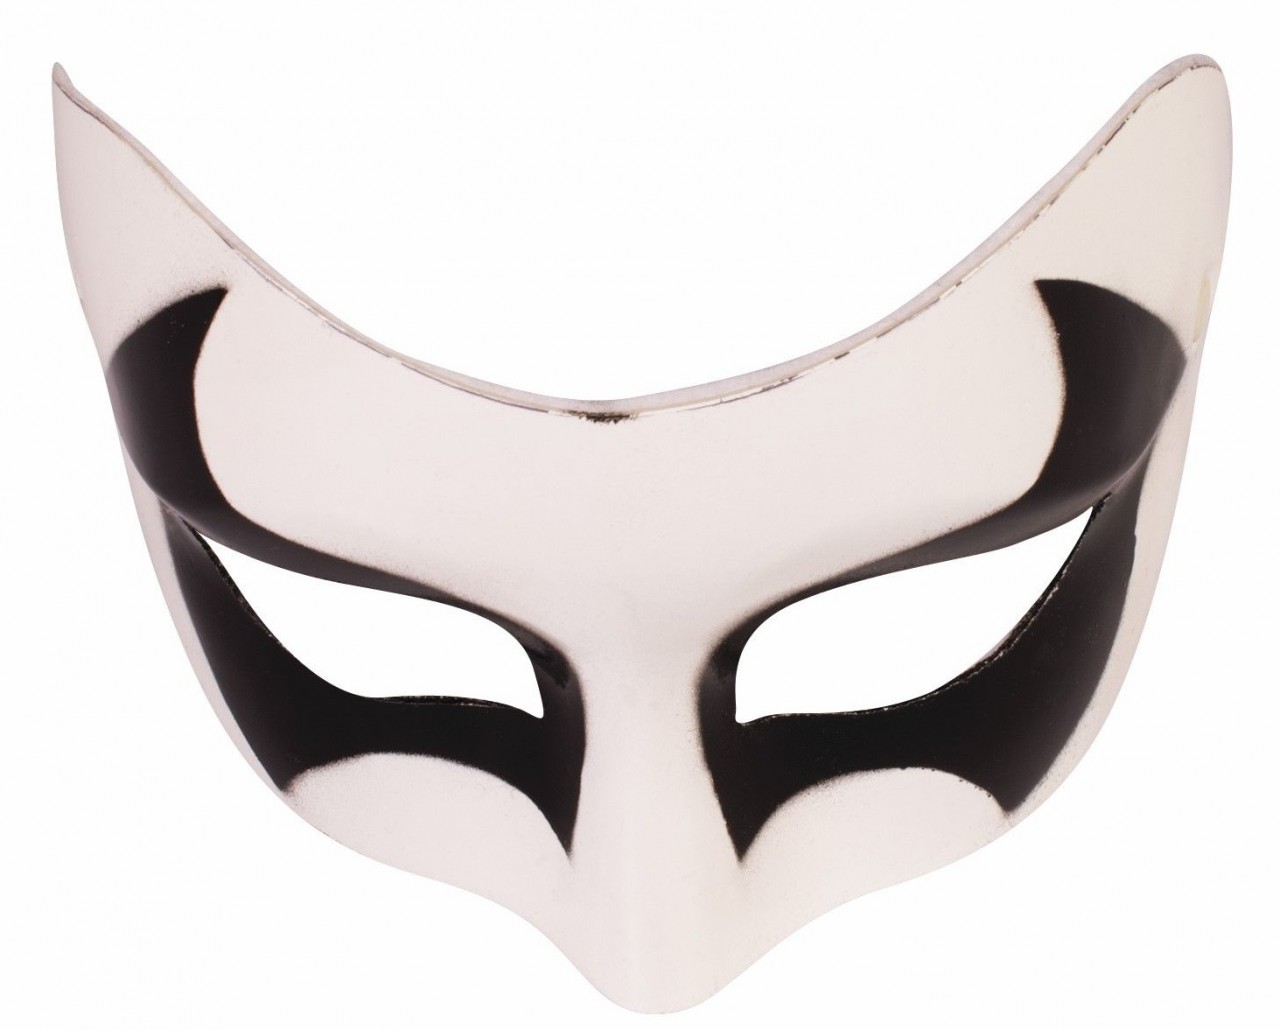 White Masquerade Mask with Black Eyes